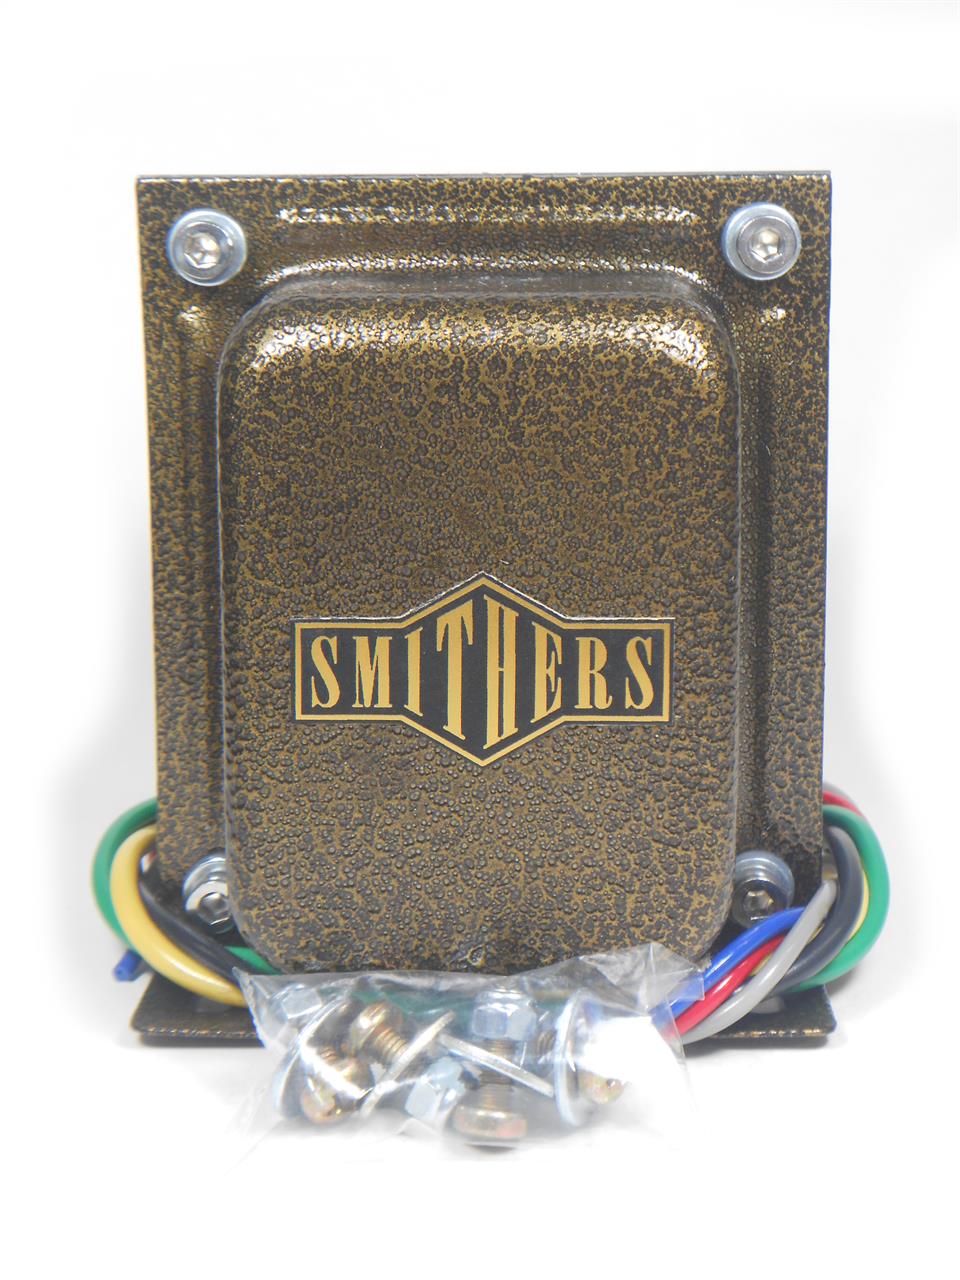 Transformadores - Transformador de saída 50W SM45 Smithers Áudio